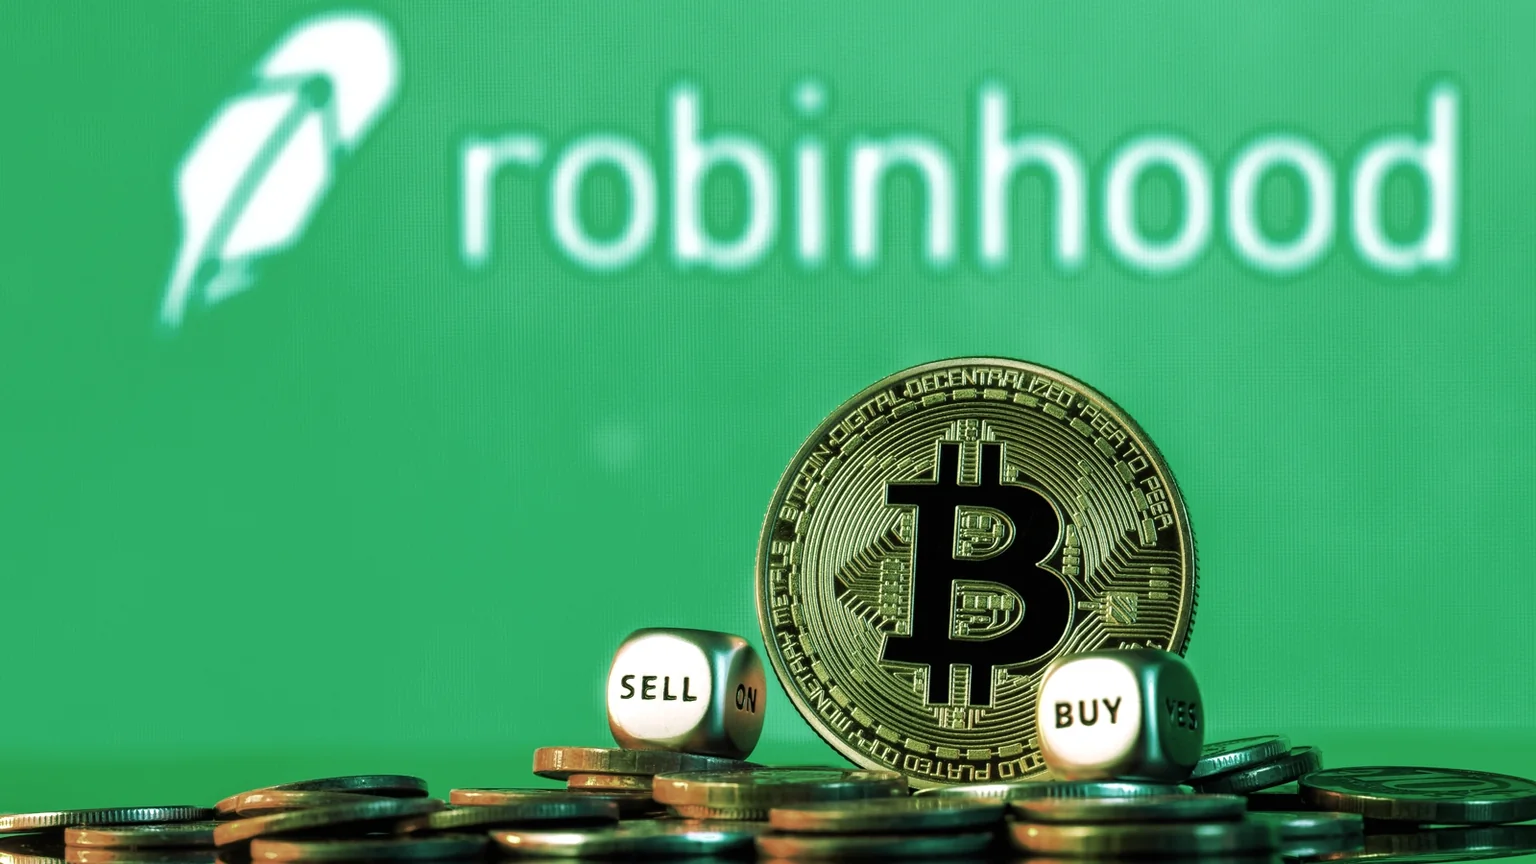 Bitcoin on Robinhood. Image: Shutterstock